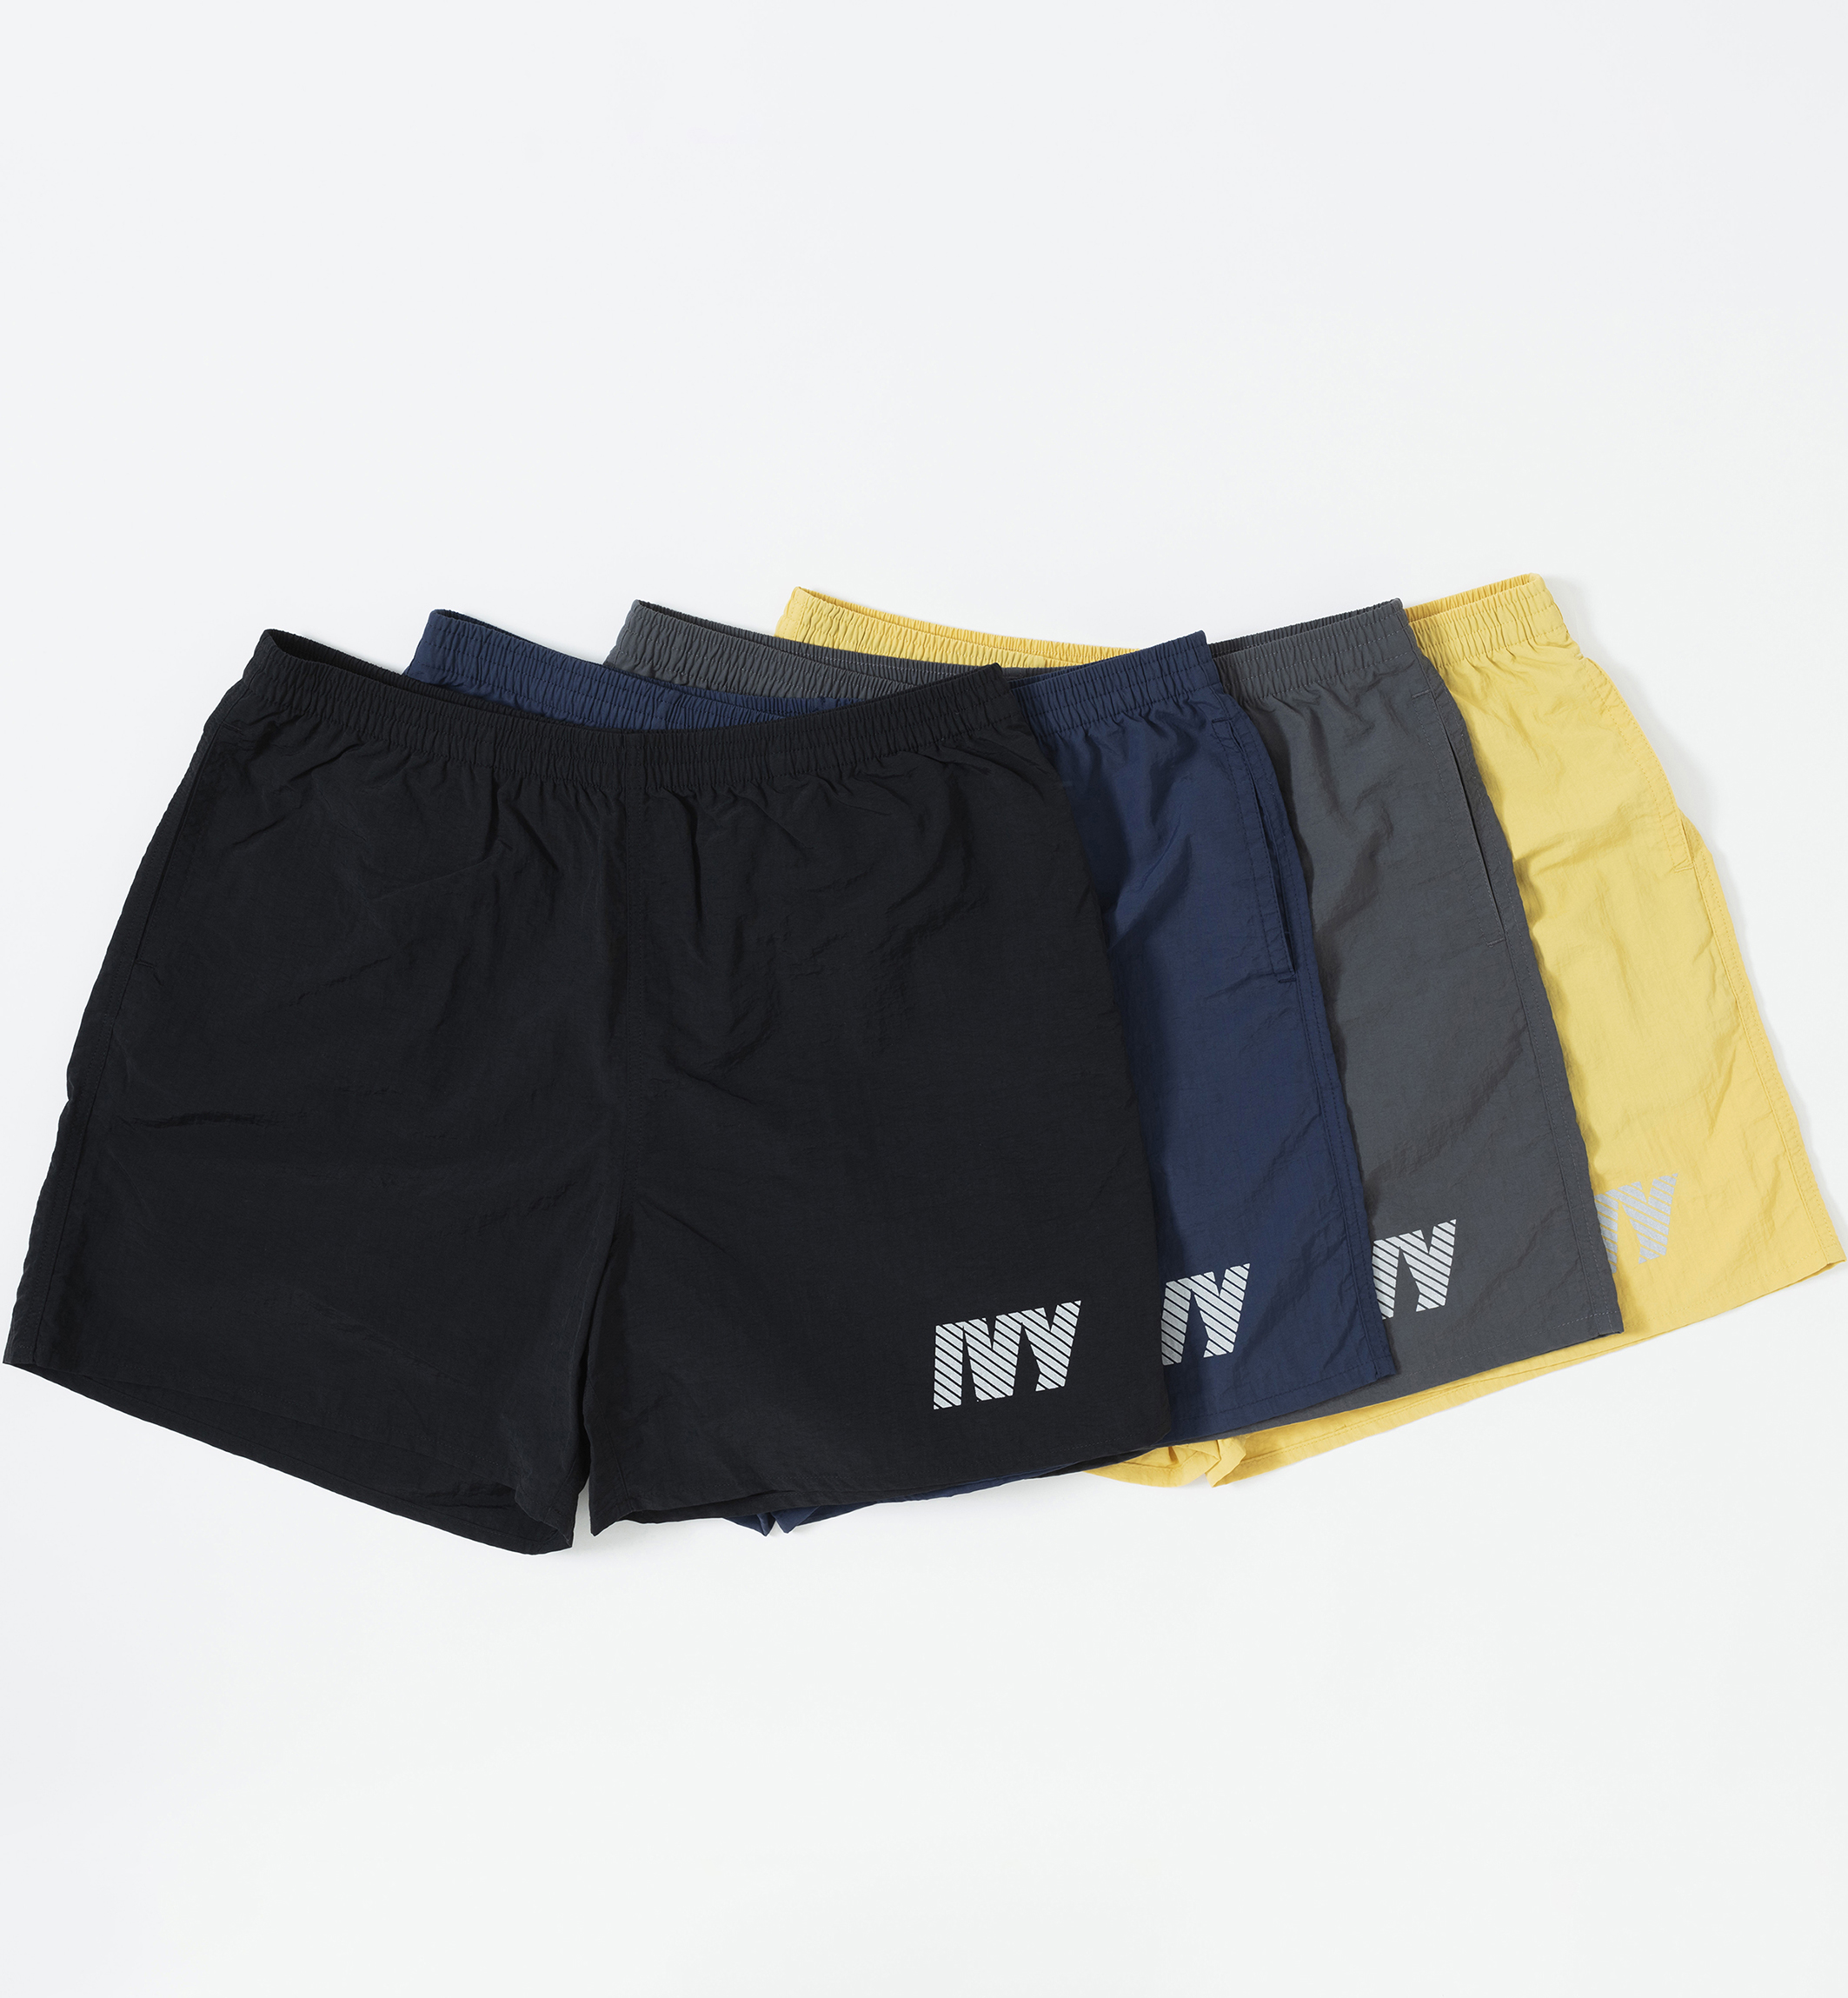 fp ivy shorts coming soon ....